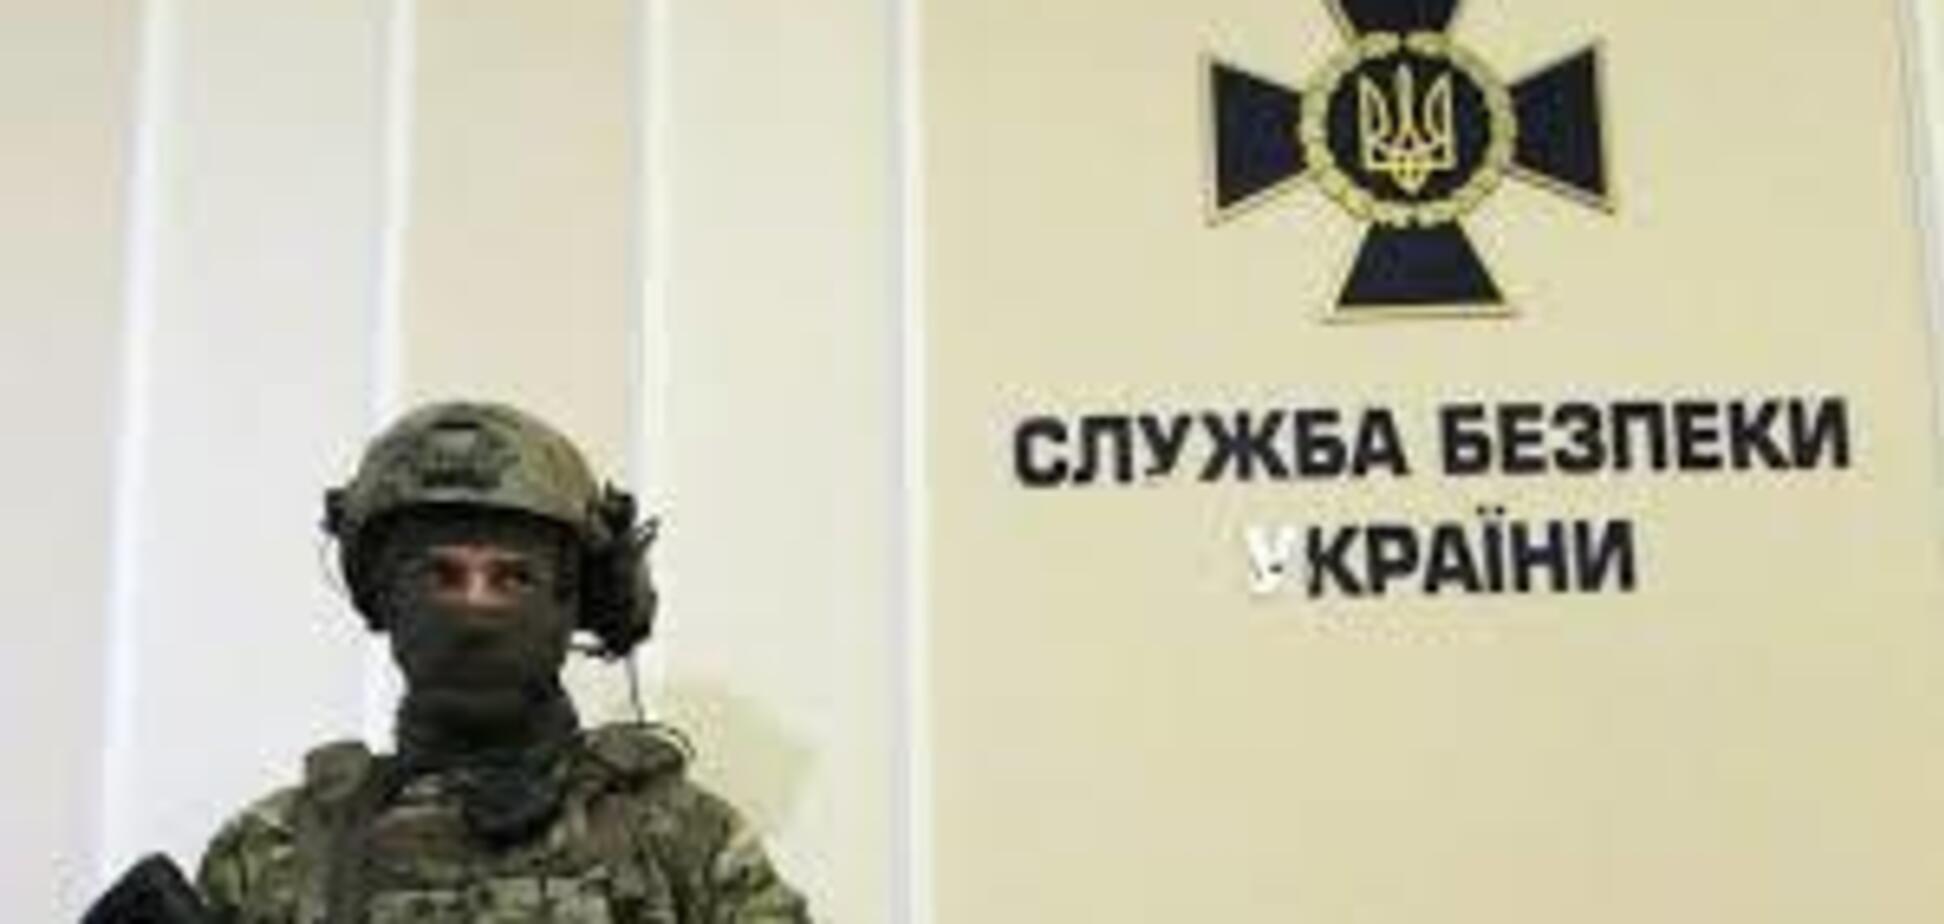 Перепутали фамилии: пропагандистов РФ поймали на наглом фейке об СБУ